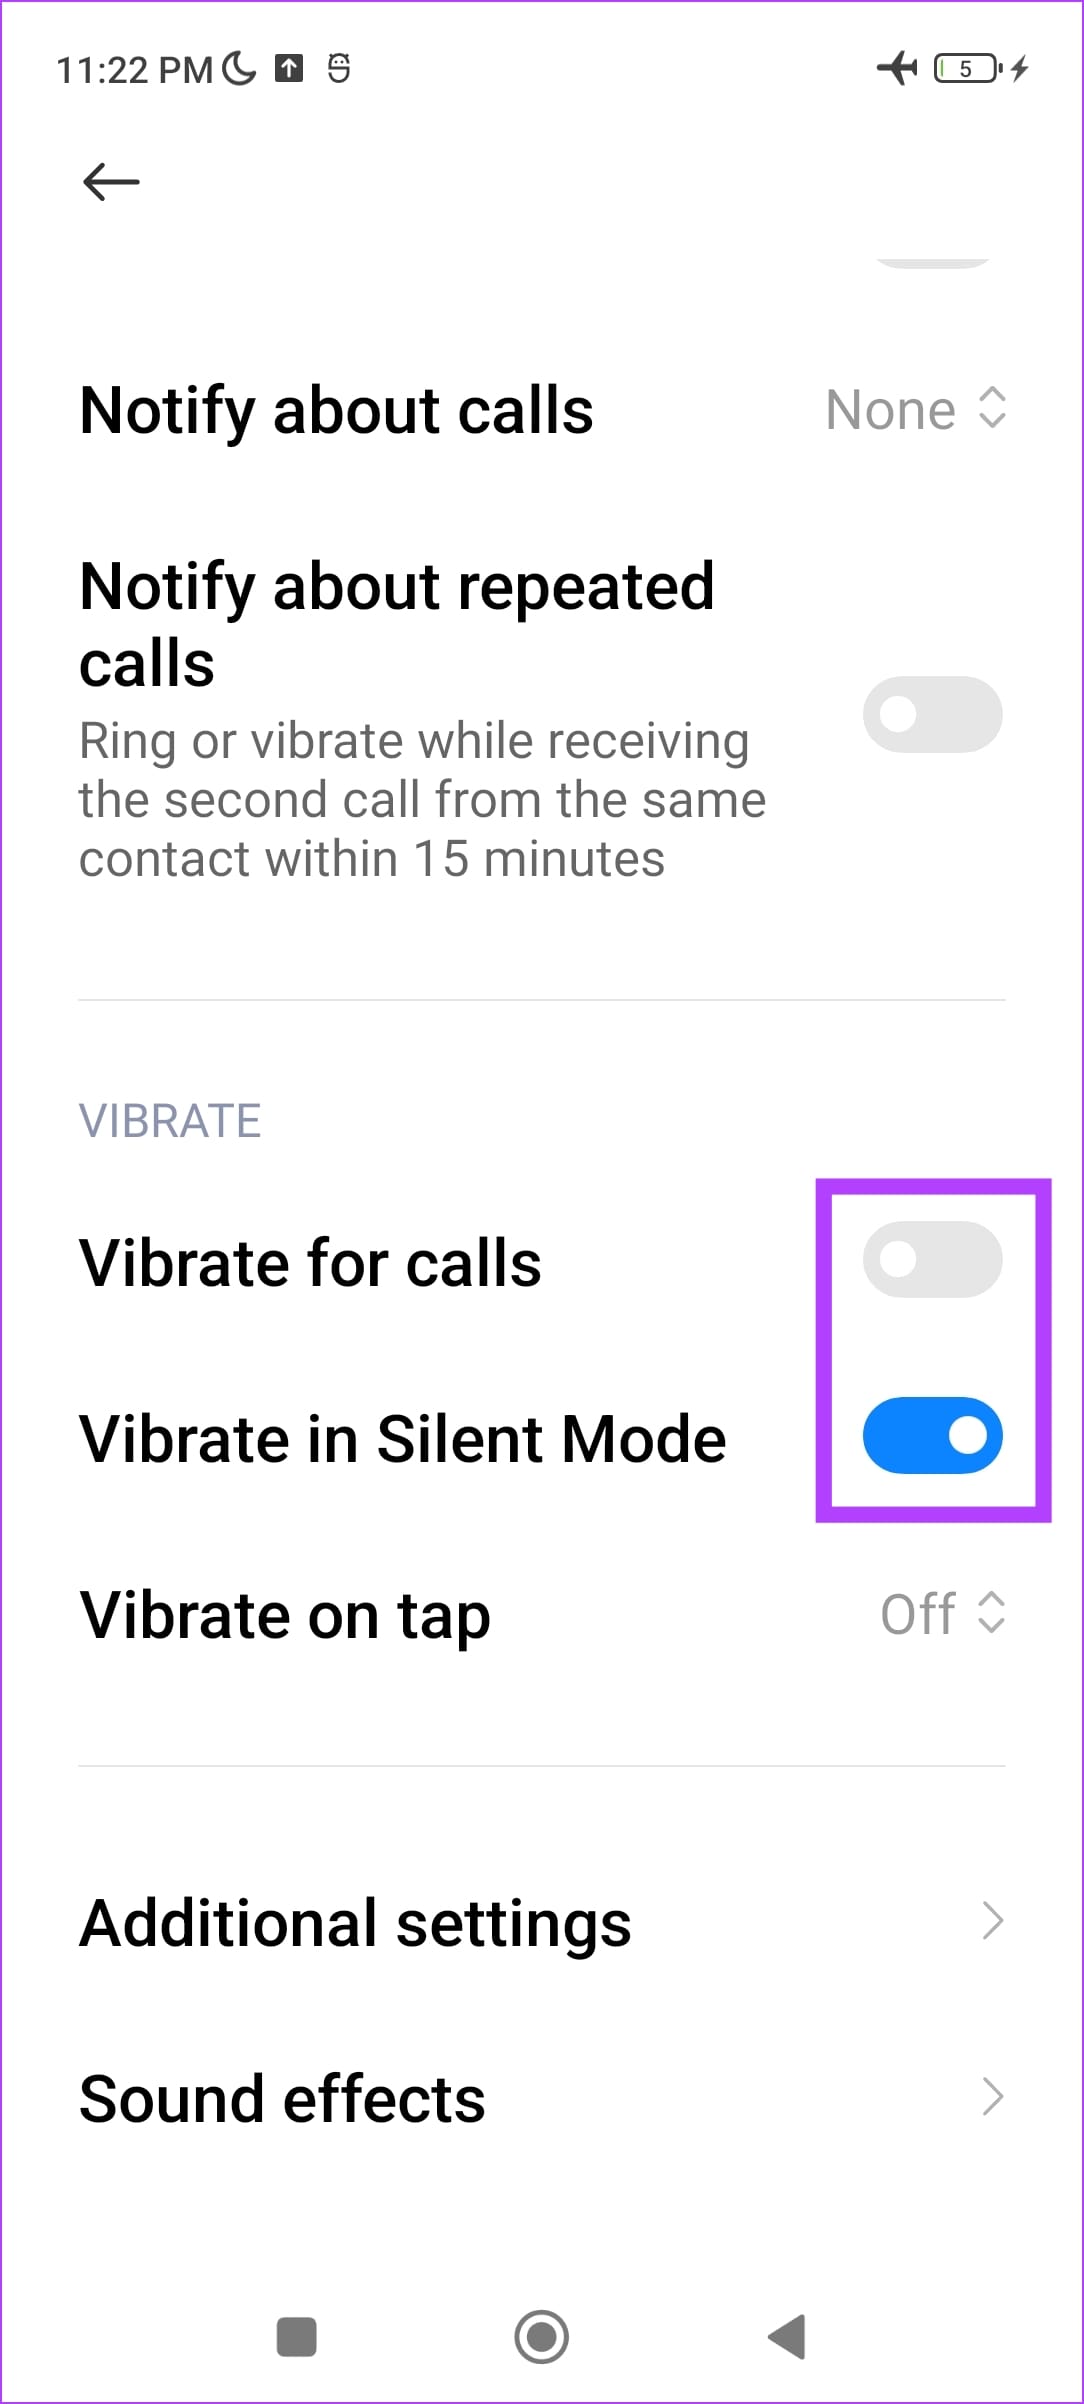 Vibrate for calls